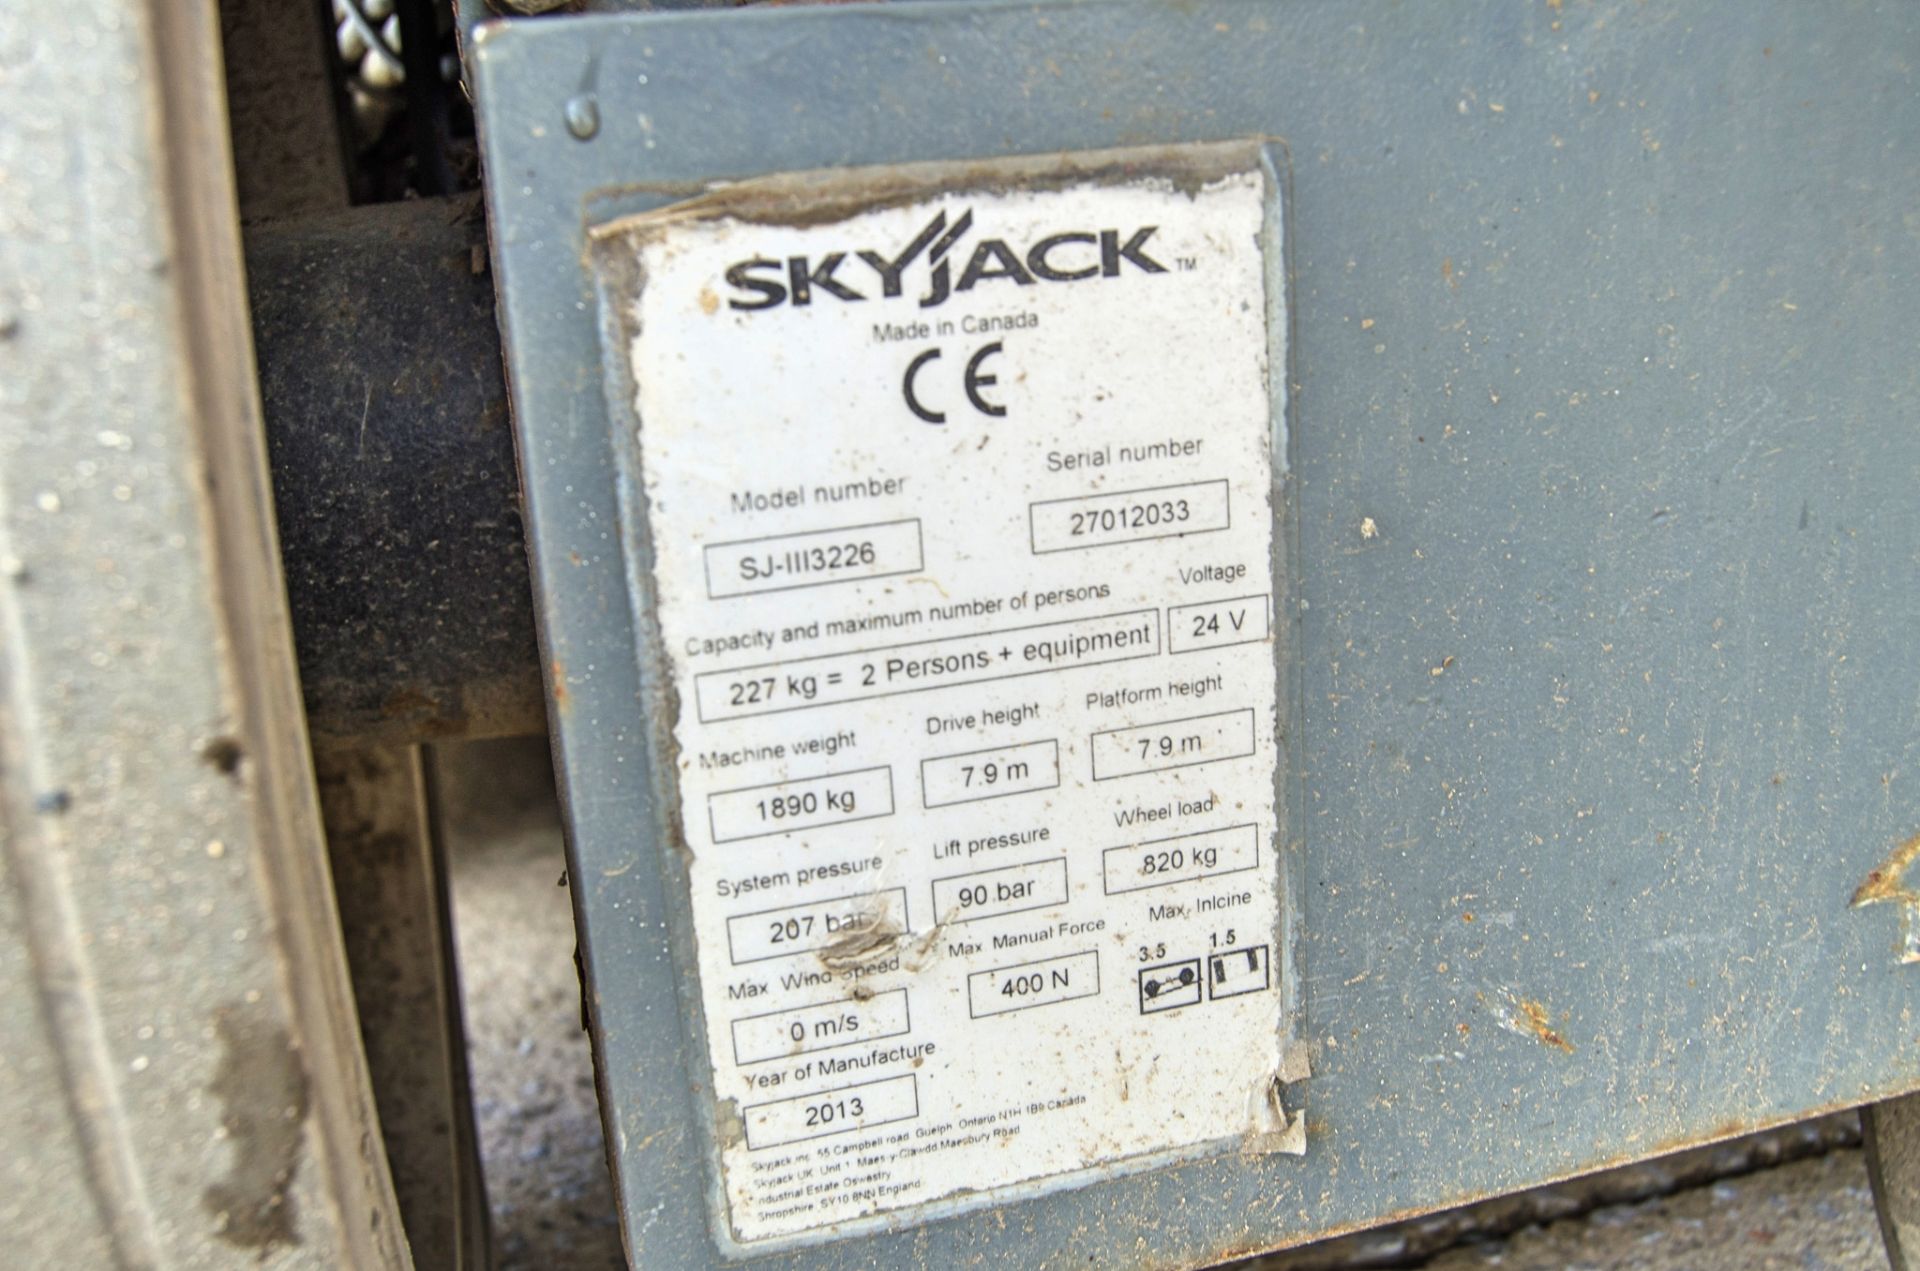 Skyjack SJIII 3226 battery electric scissor lift access platform Year: 2013 S/N: 27012033 S8261 - Image 9 of 10